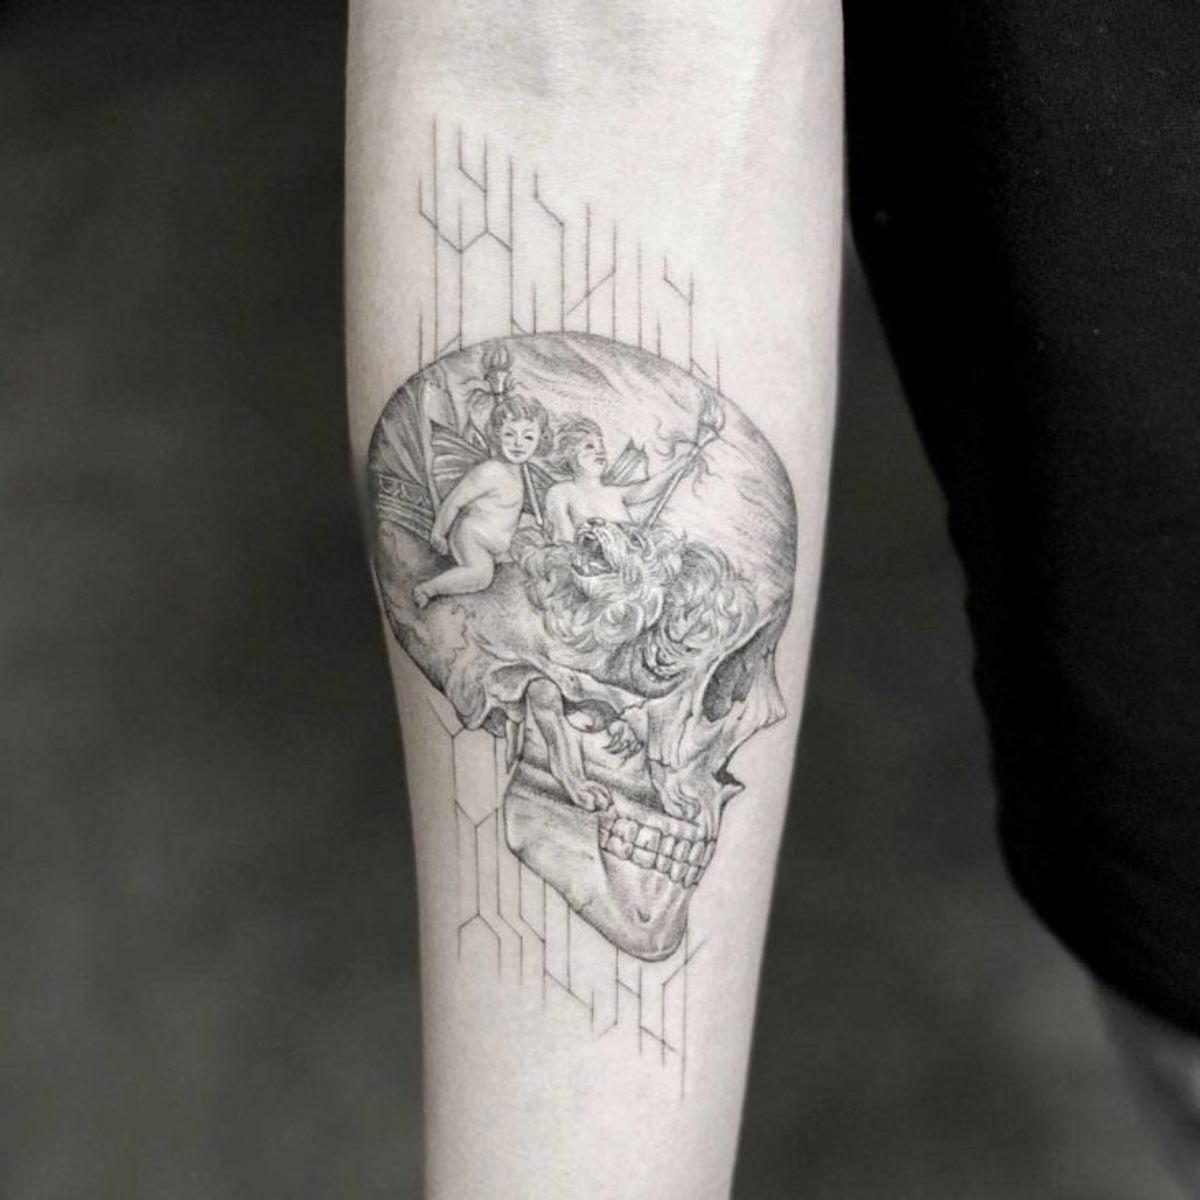 Myšlenky-Skull-Tattoo-by-Mr.K-728x728-1